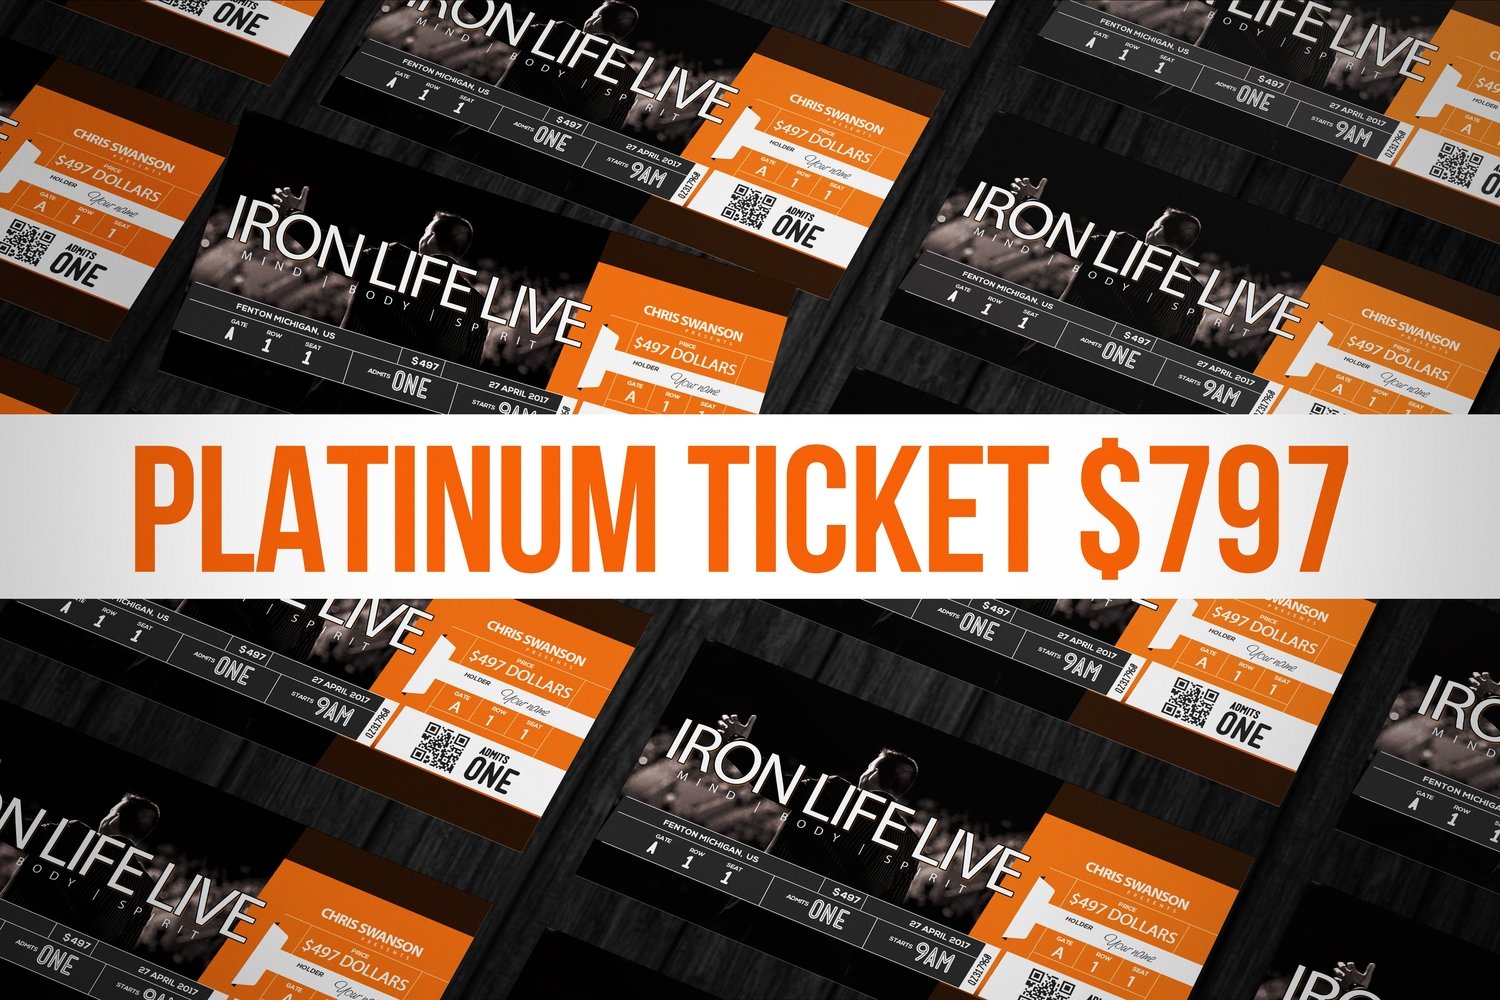 IRON LIFE LIVE -Platinum Ticket